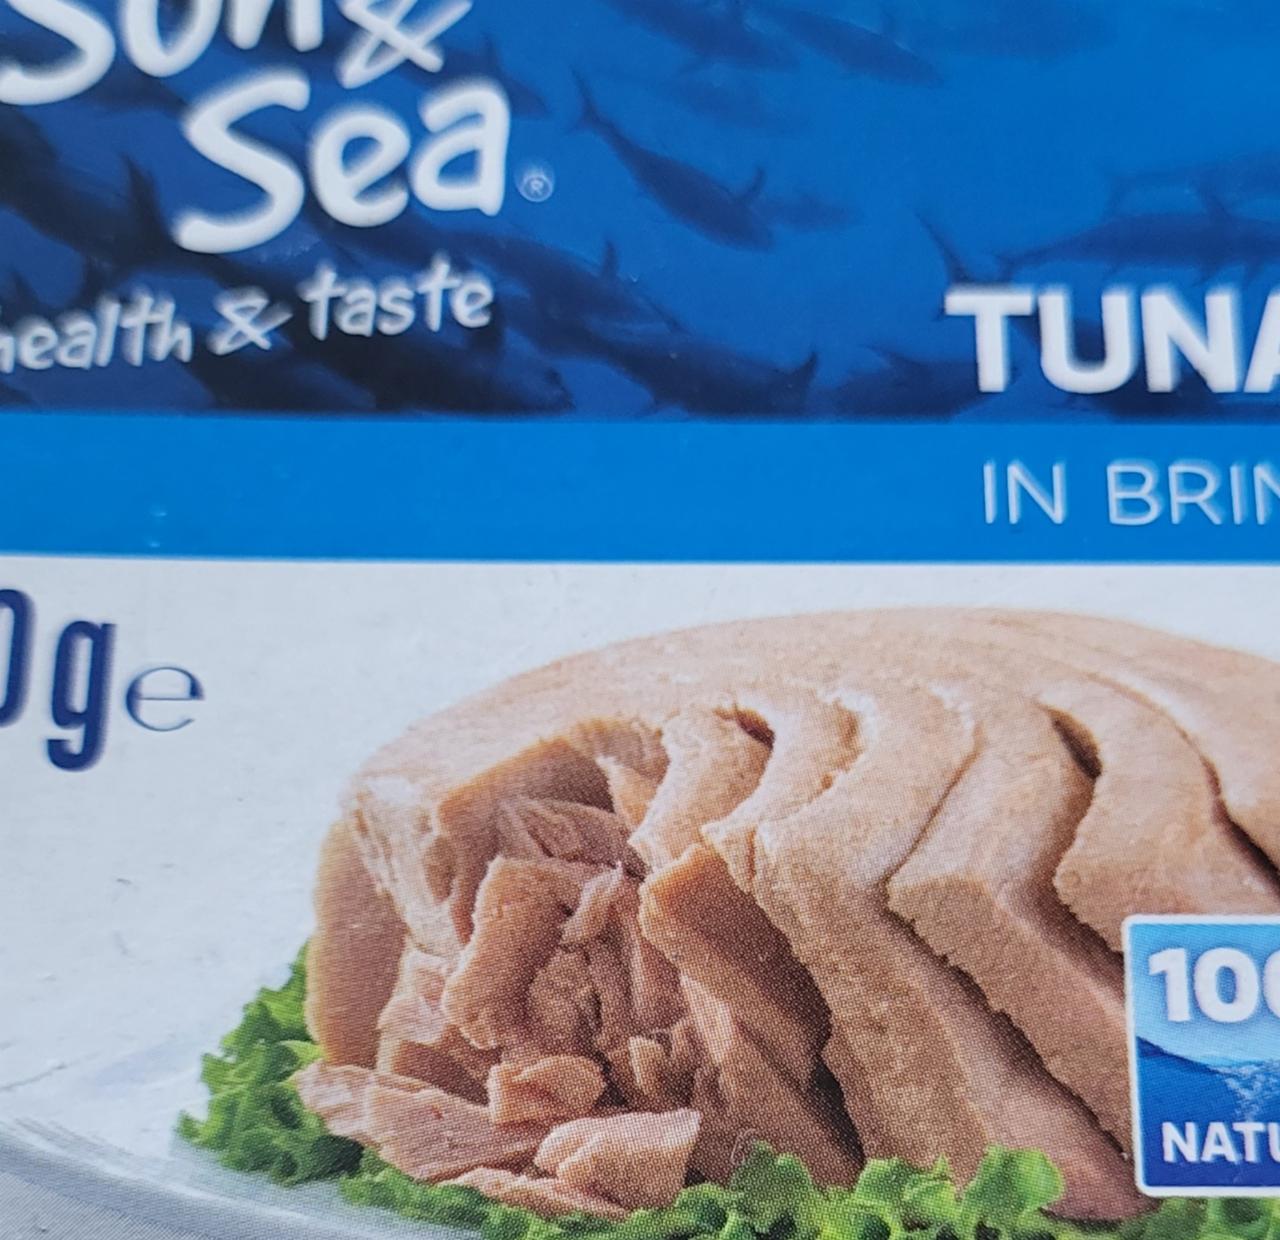 Fotografie - Sun &Sea tuna In brine Billa Sun & Sea